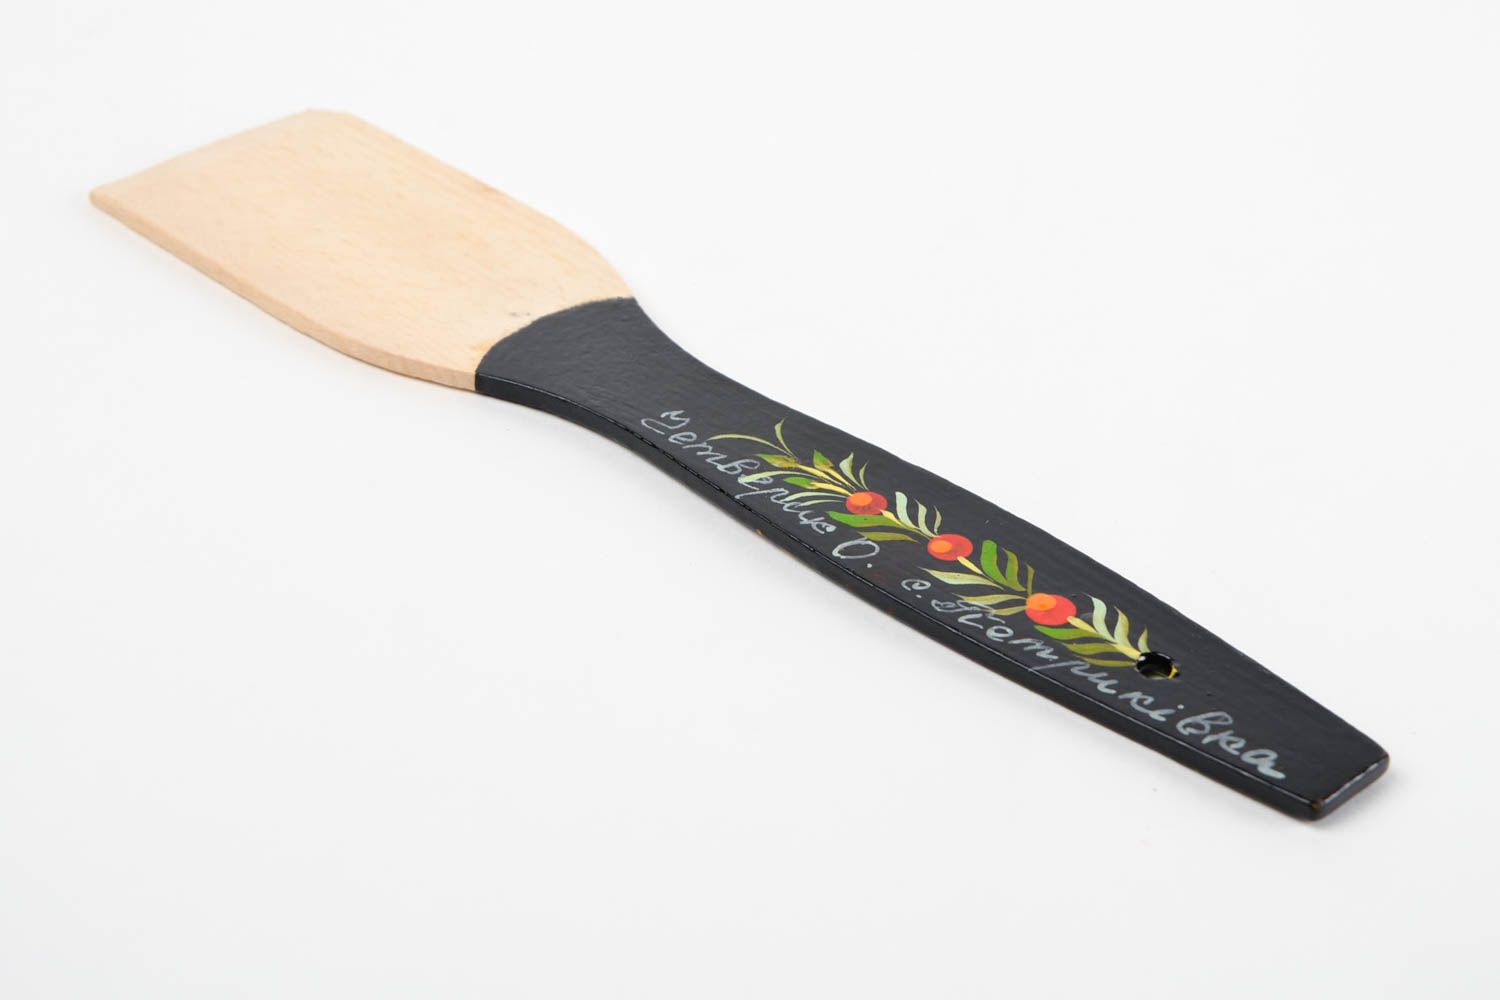 Handmade spatula designer spatula wooden kitchen utensils unusual gift ideas  photo 5